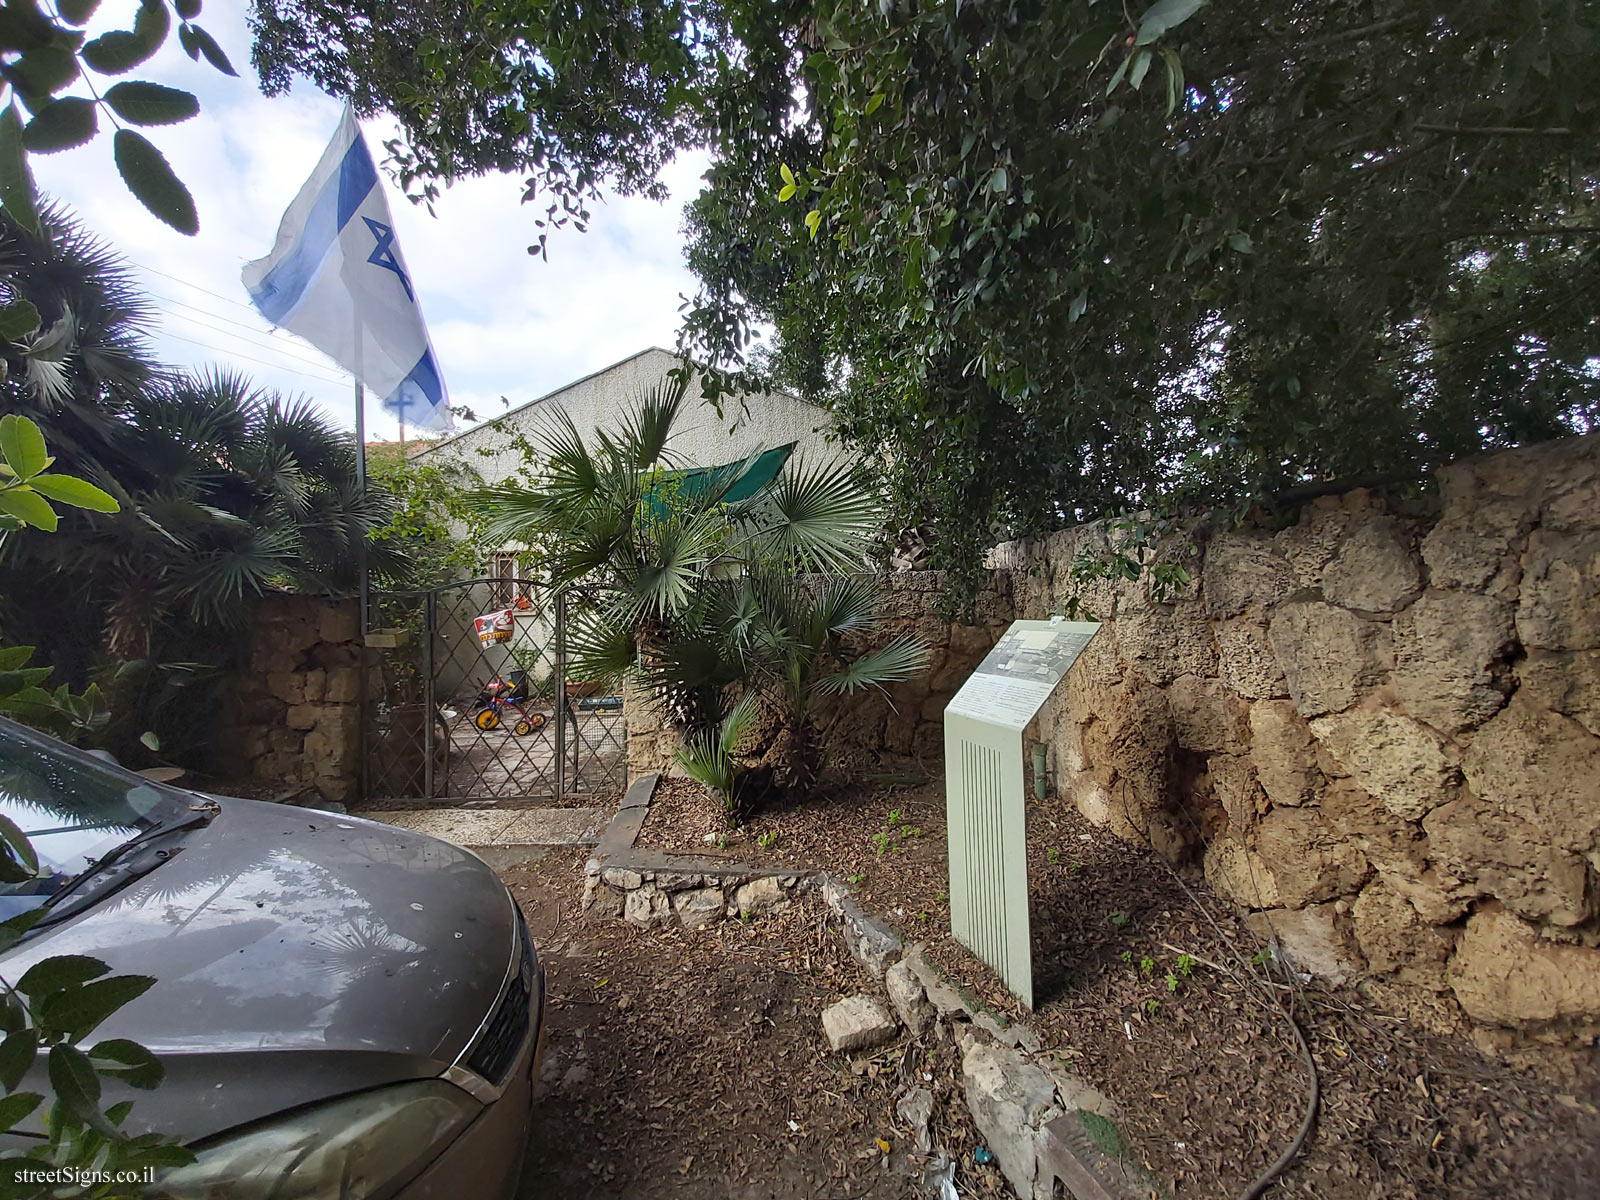 Bejerano House - Zar St, Ramat Gan, Israel